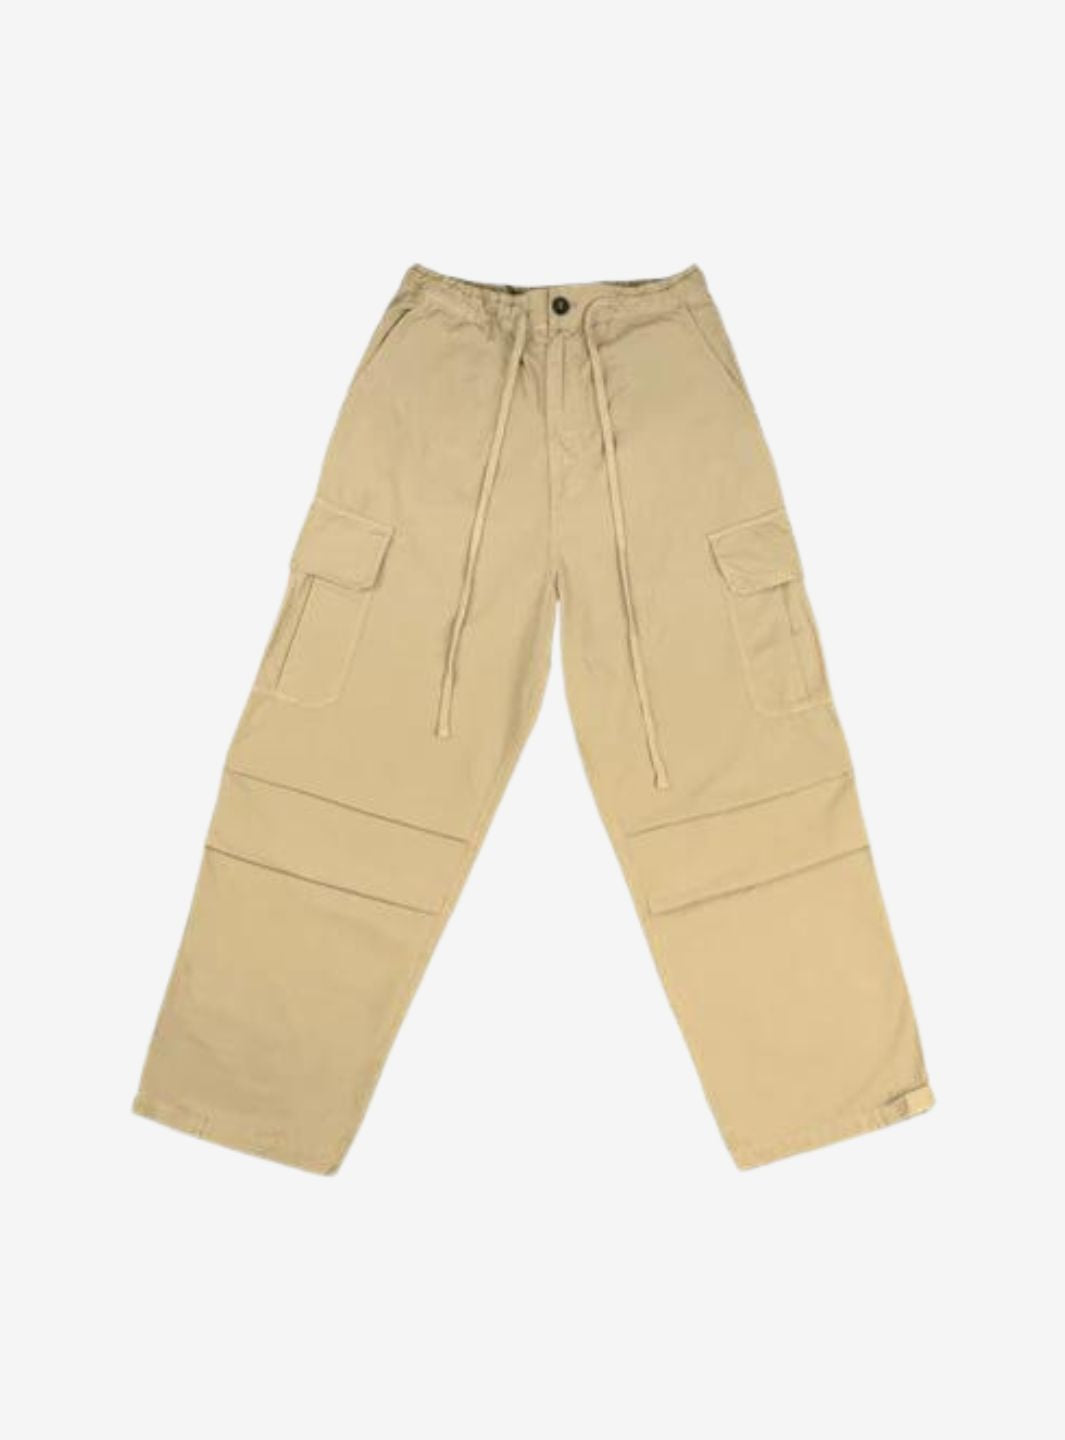 Garment WorkShop Parachute Pants Cream | ResellZone